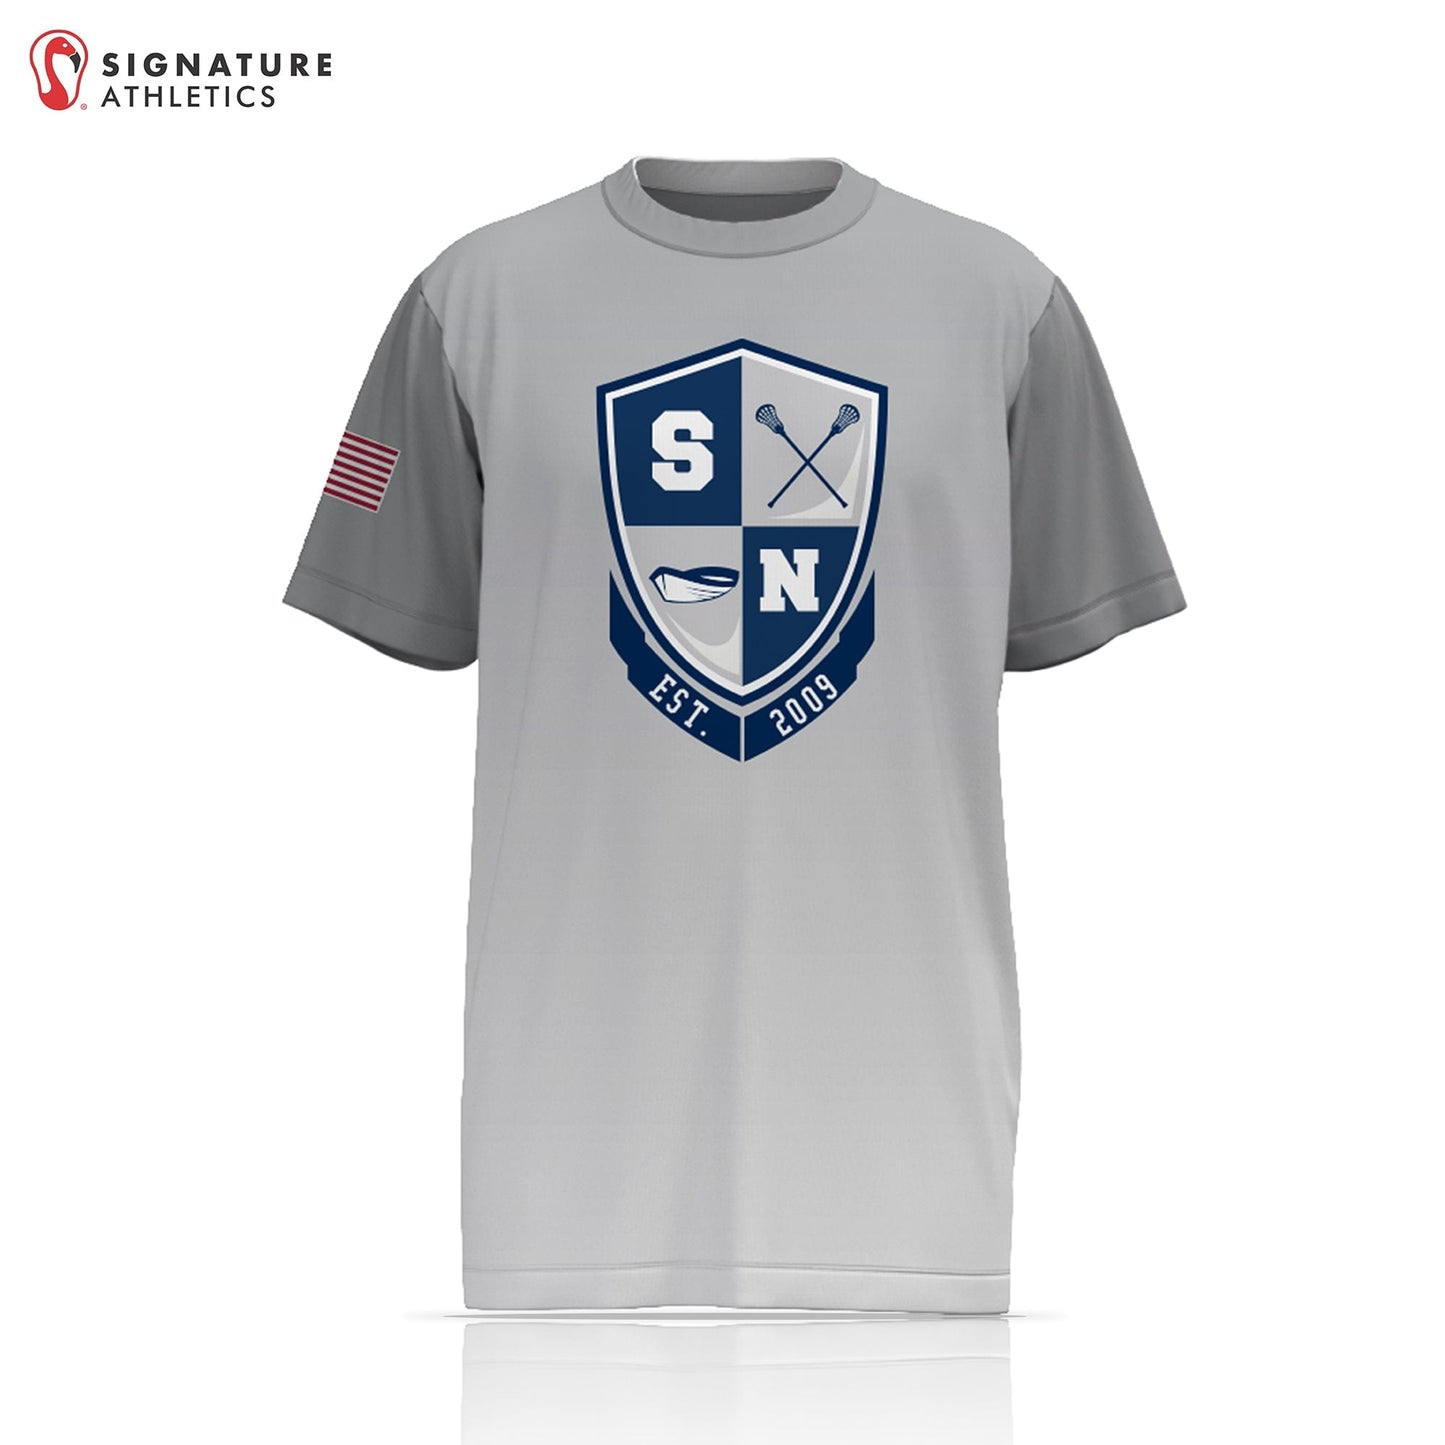 SNYL Team Swag Store Women's Performance Short Sleeve Shooter Shirt (Sold Seperately):Girls U13 Signature Lacrosse